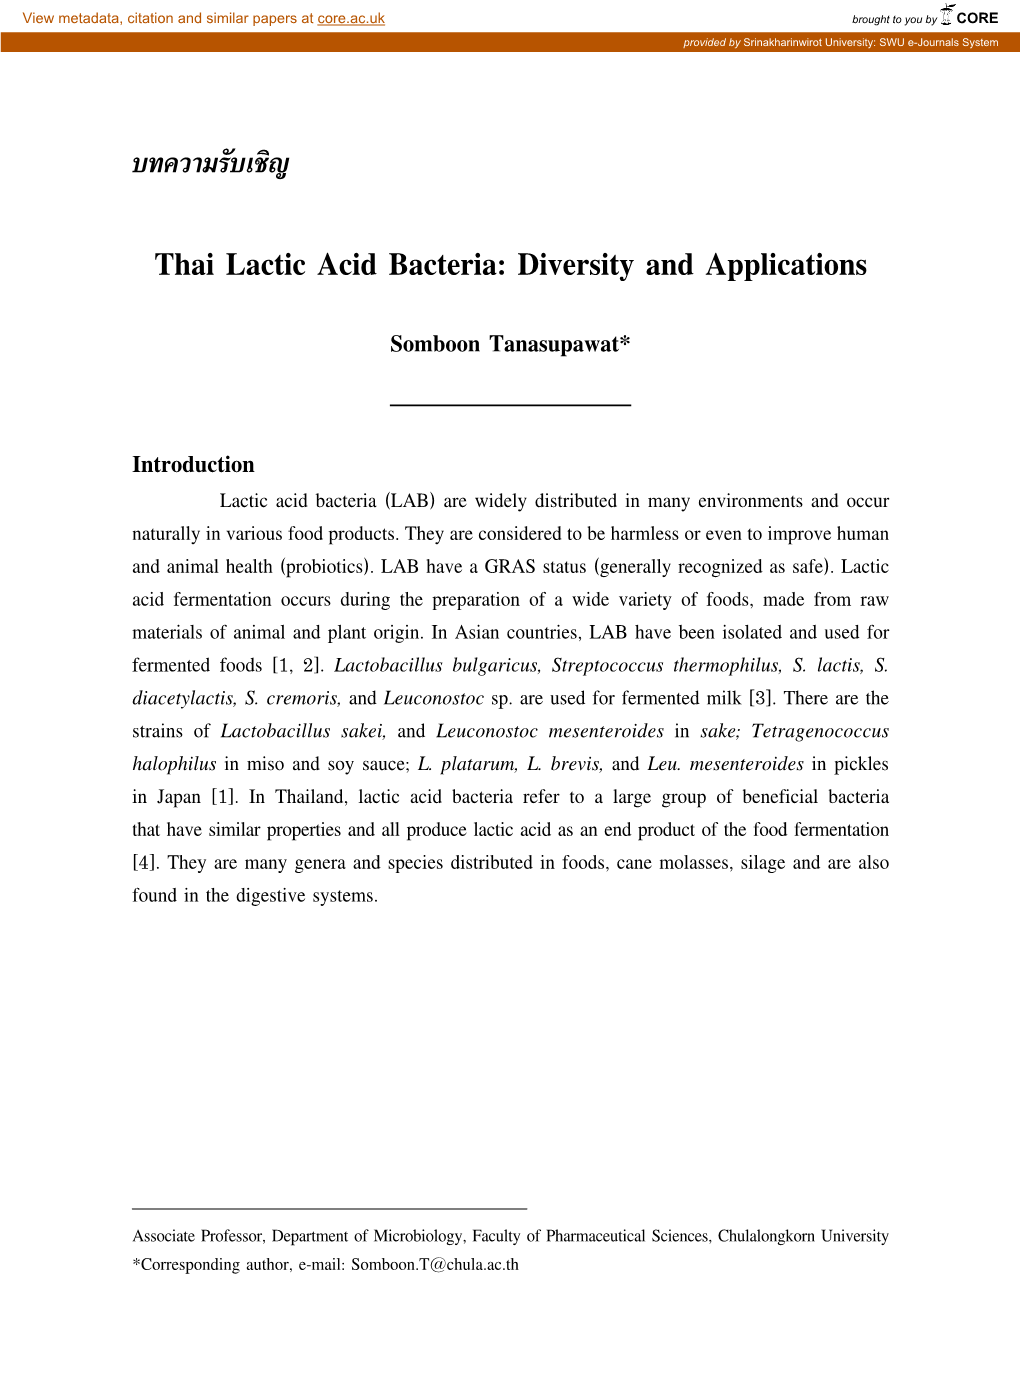 Diversity of Lactic Acid Bacteria in Thai Fermented Foods